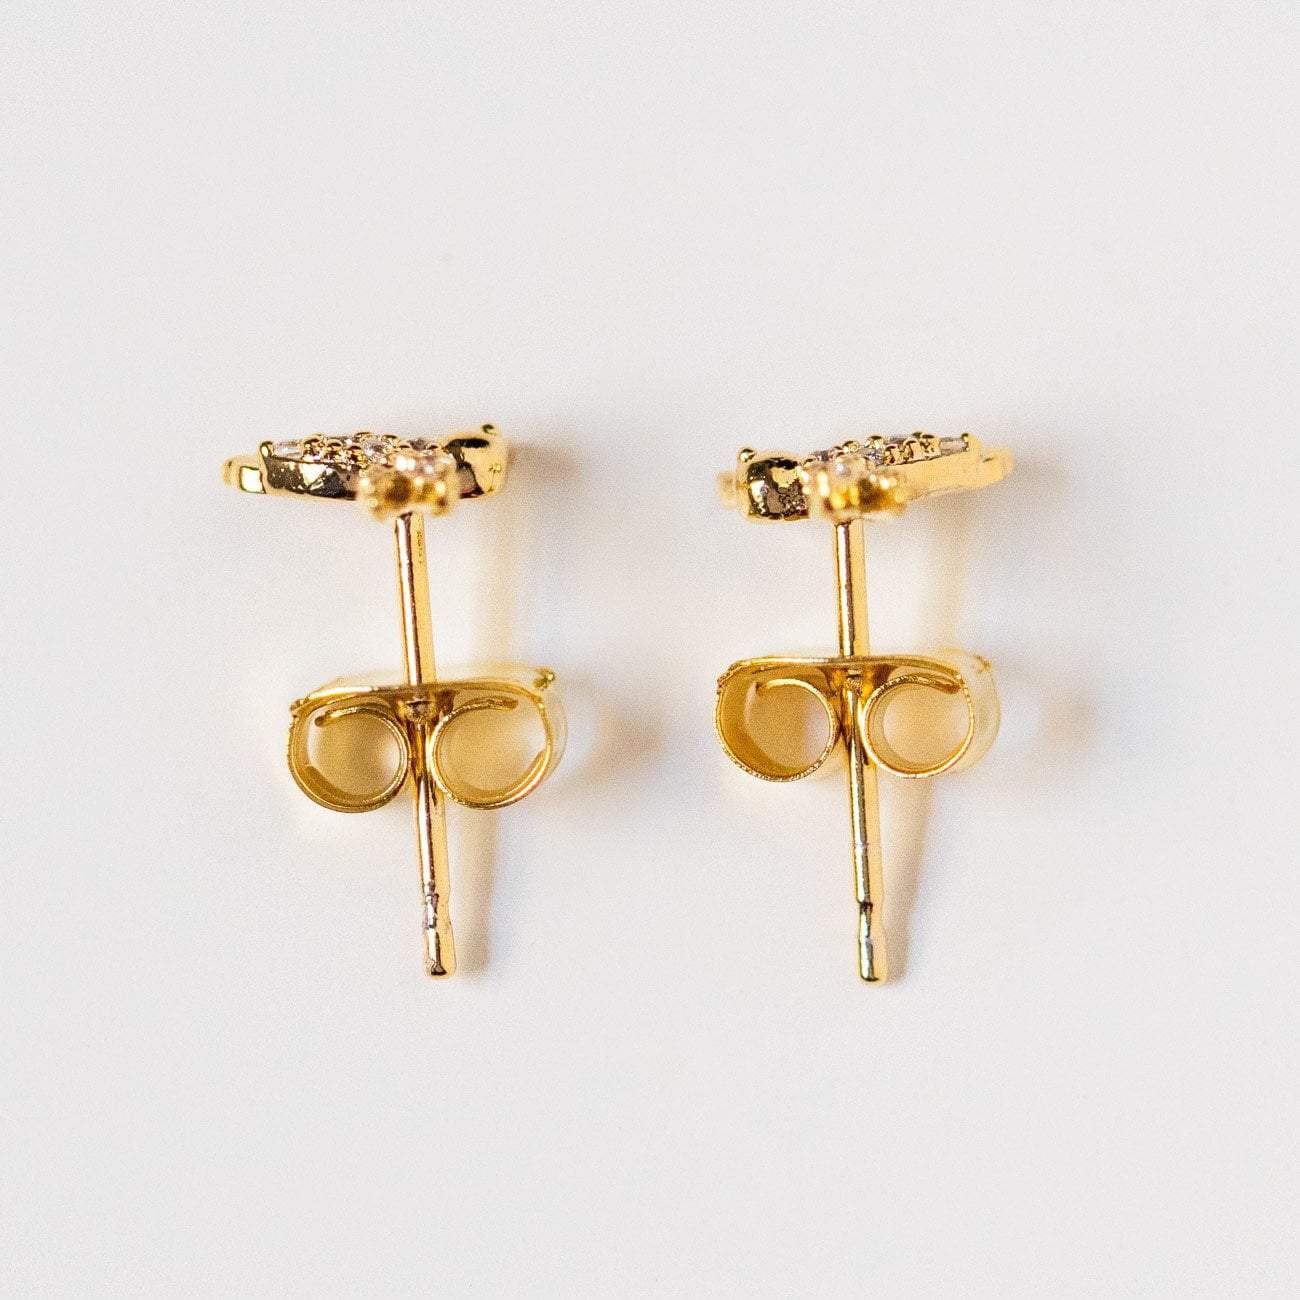 cz hummingbird stud earrings unique yellow gold dainty jewelry